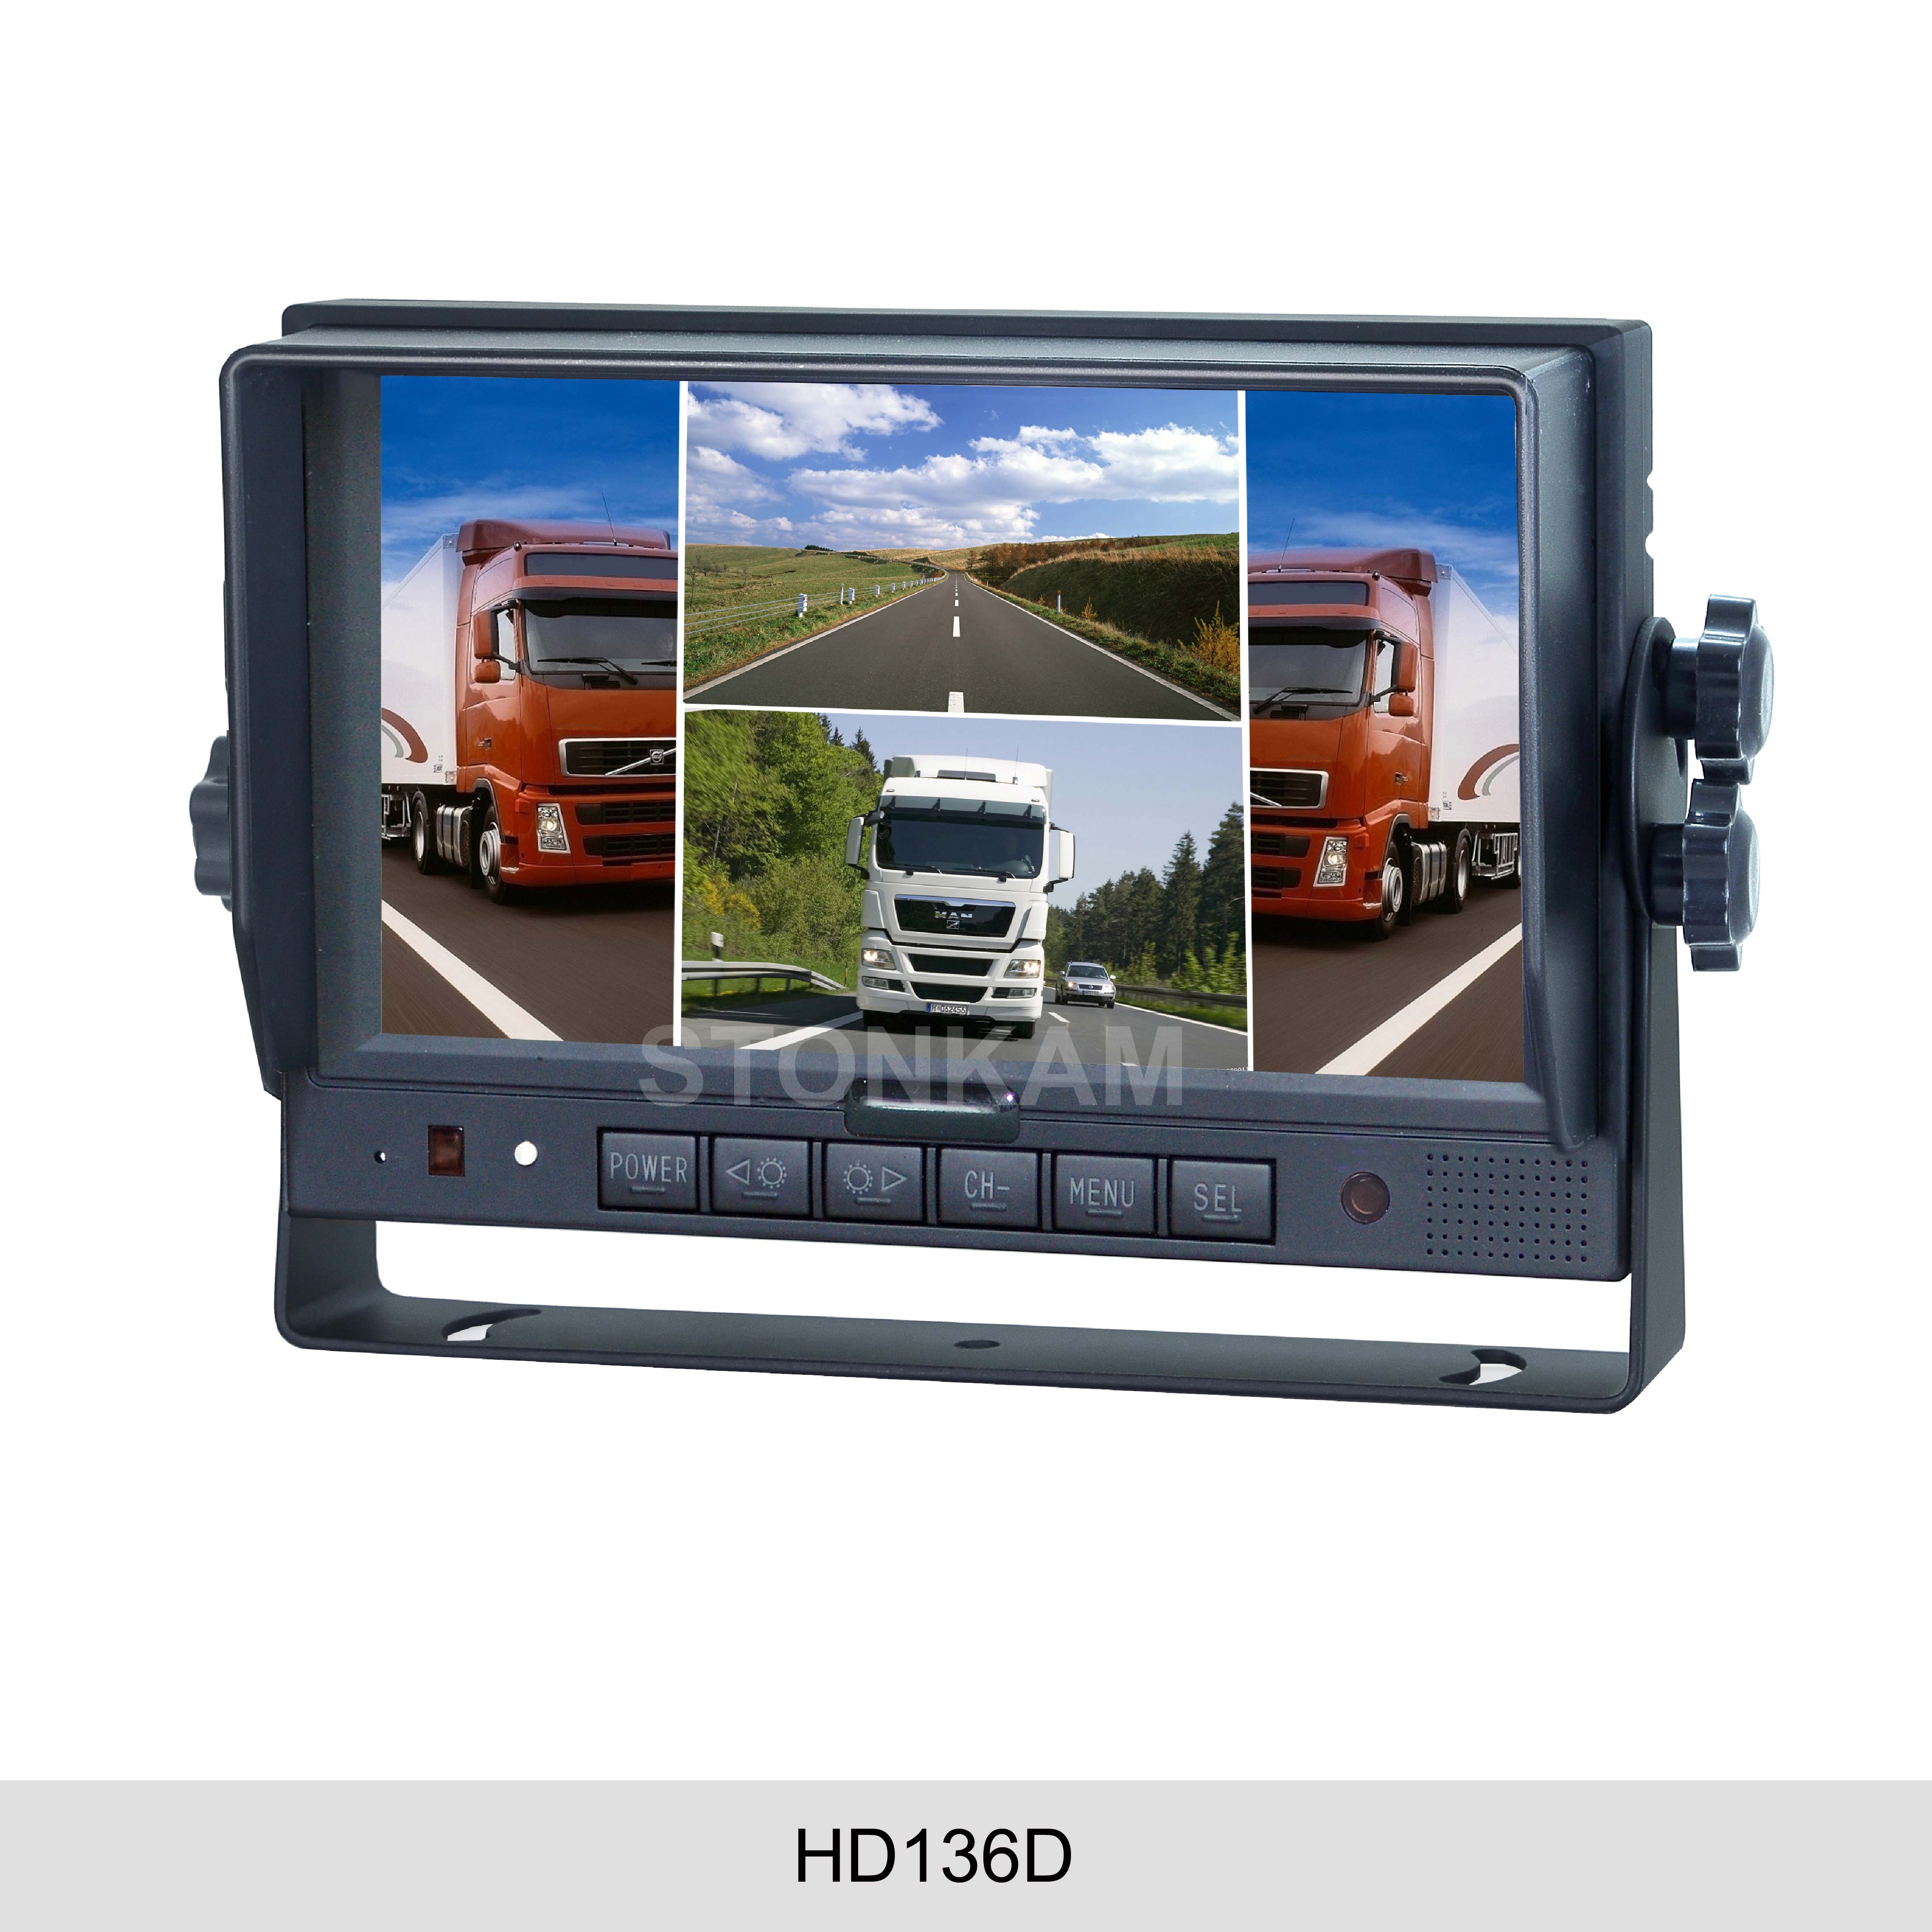 7  inch HD quad-view vehicle monitor